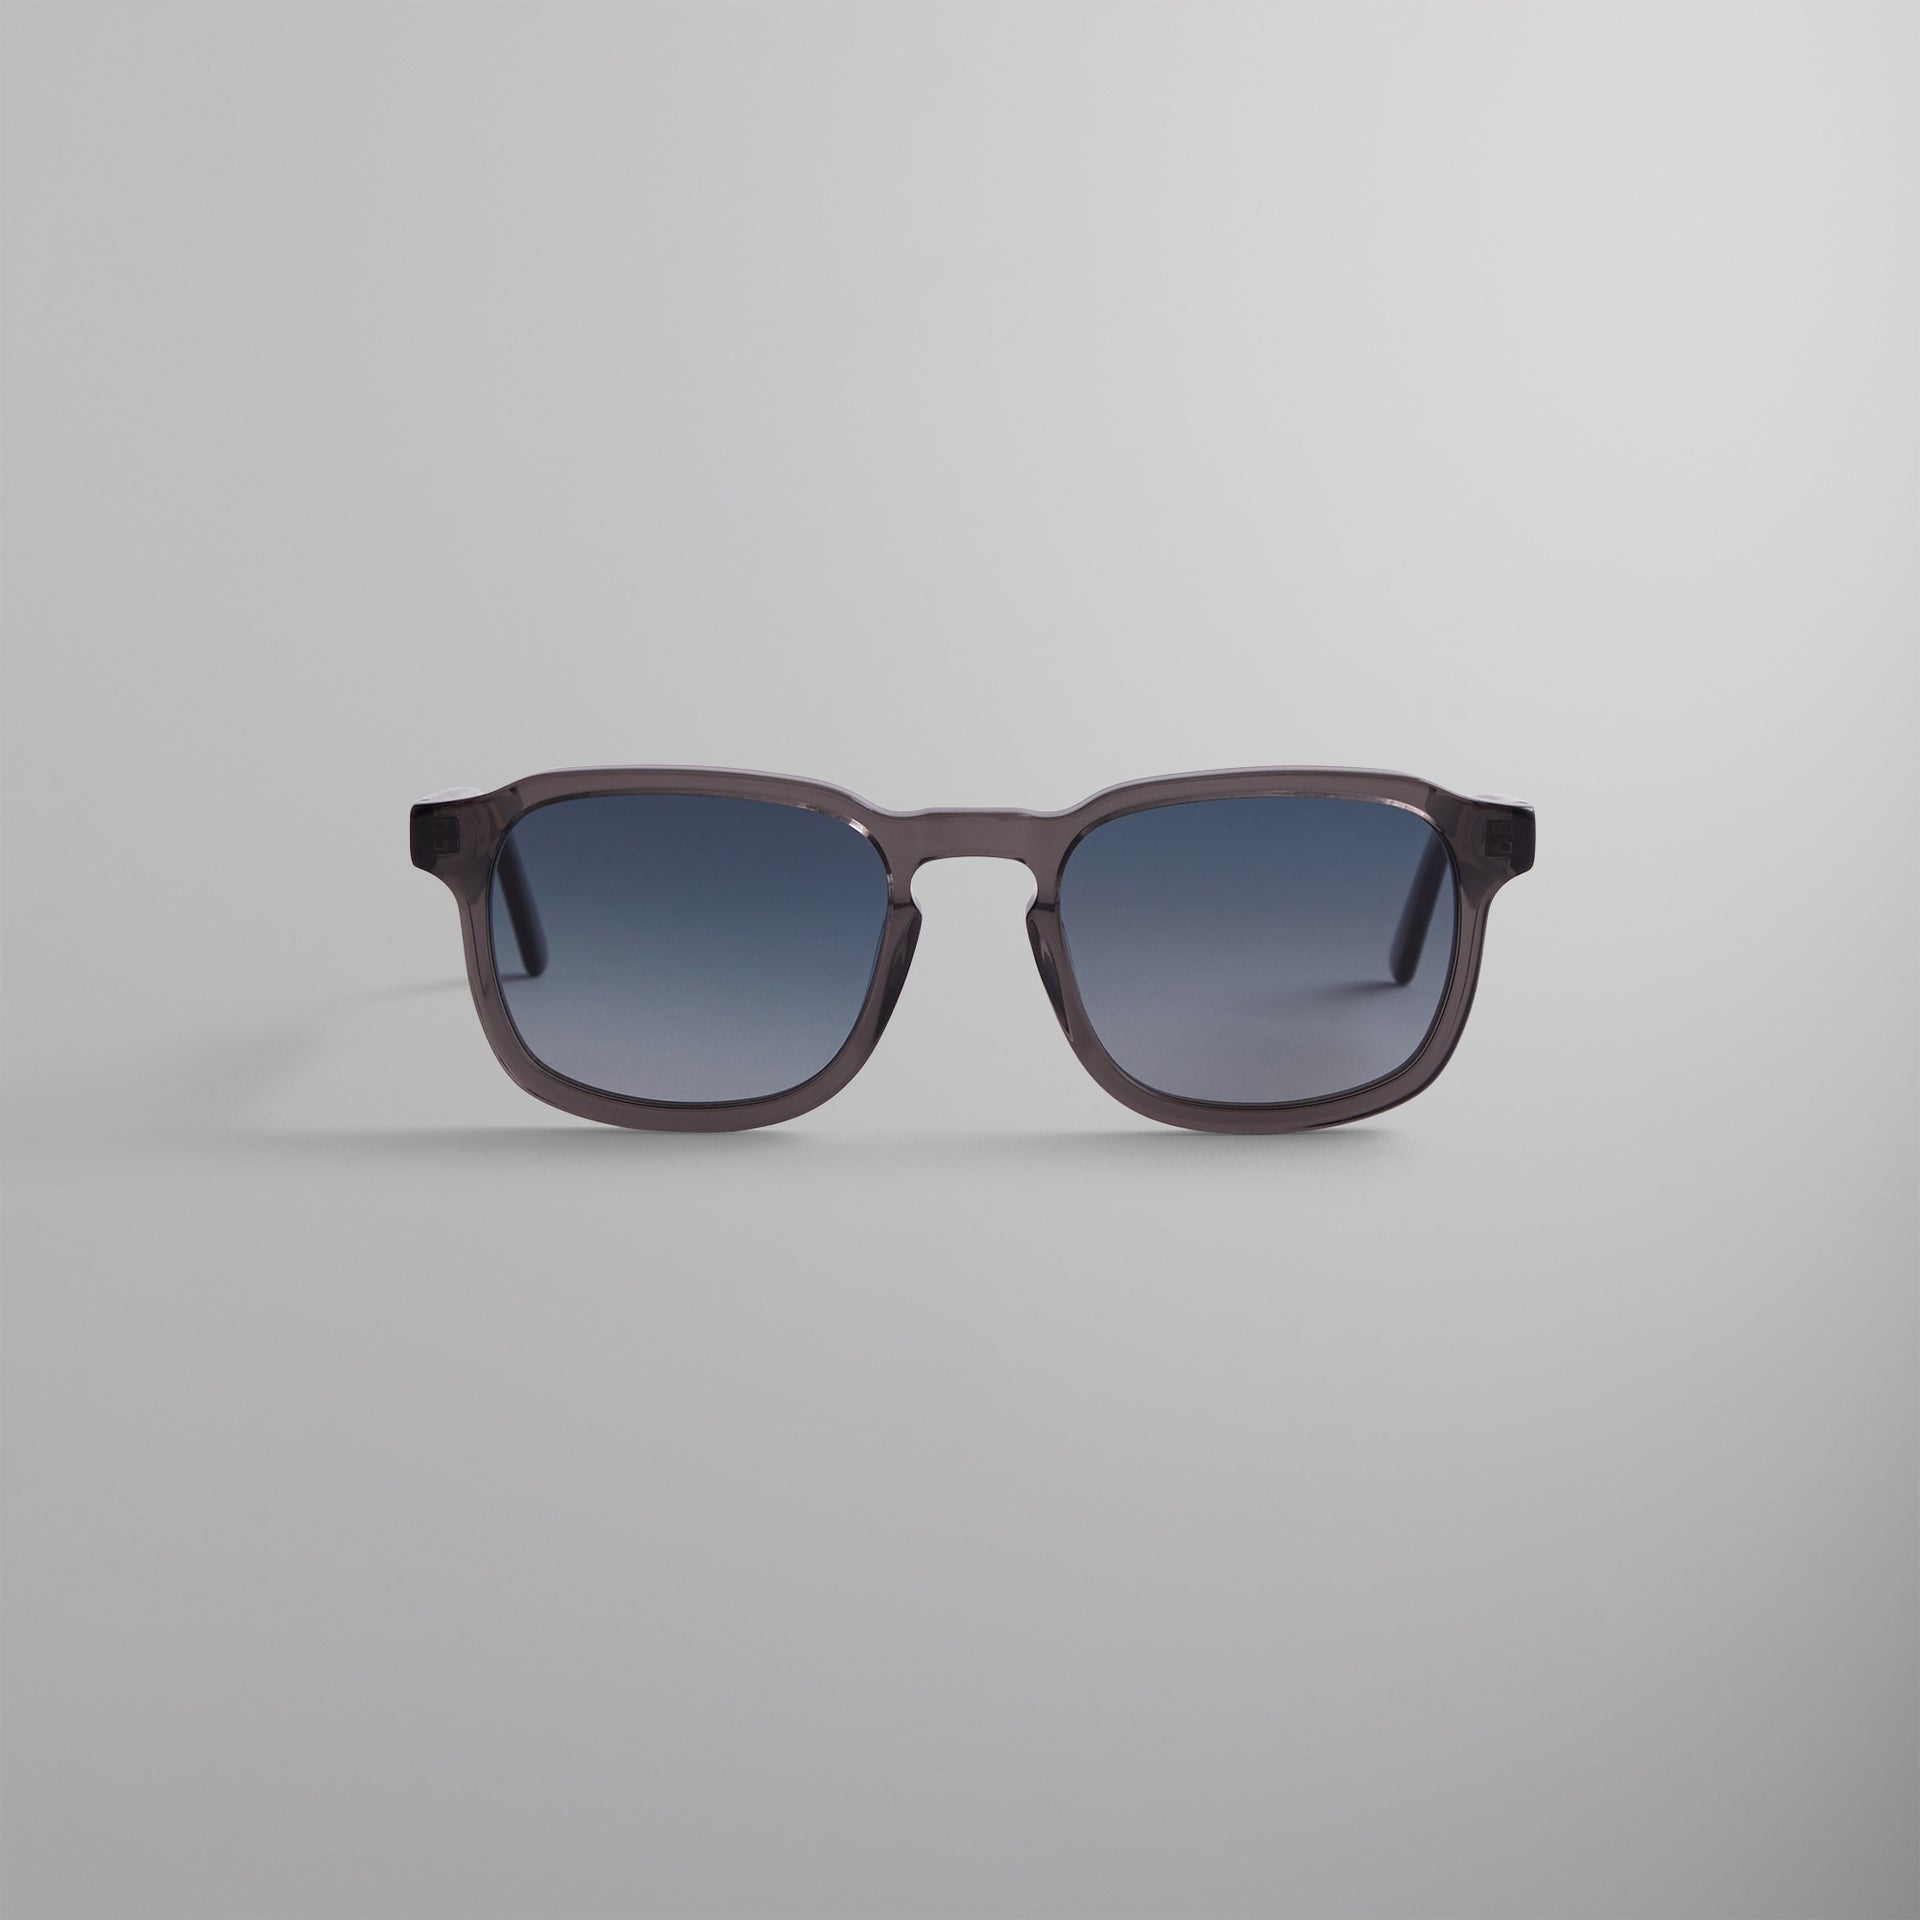 Erlebniswelt-fliegenfischenShops Napeague 02ws Sunglasses - Grey Crystal / Blue